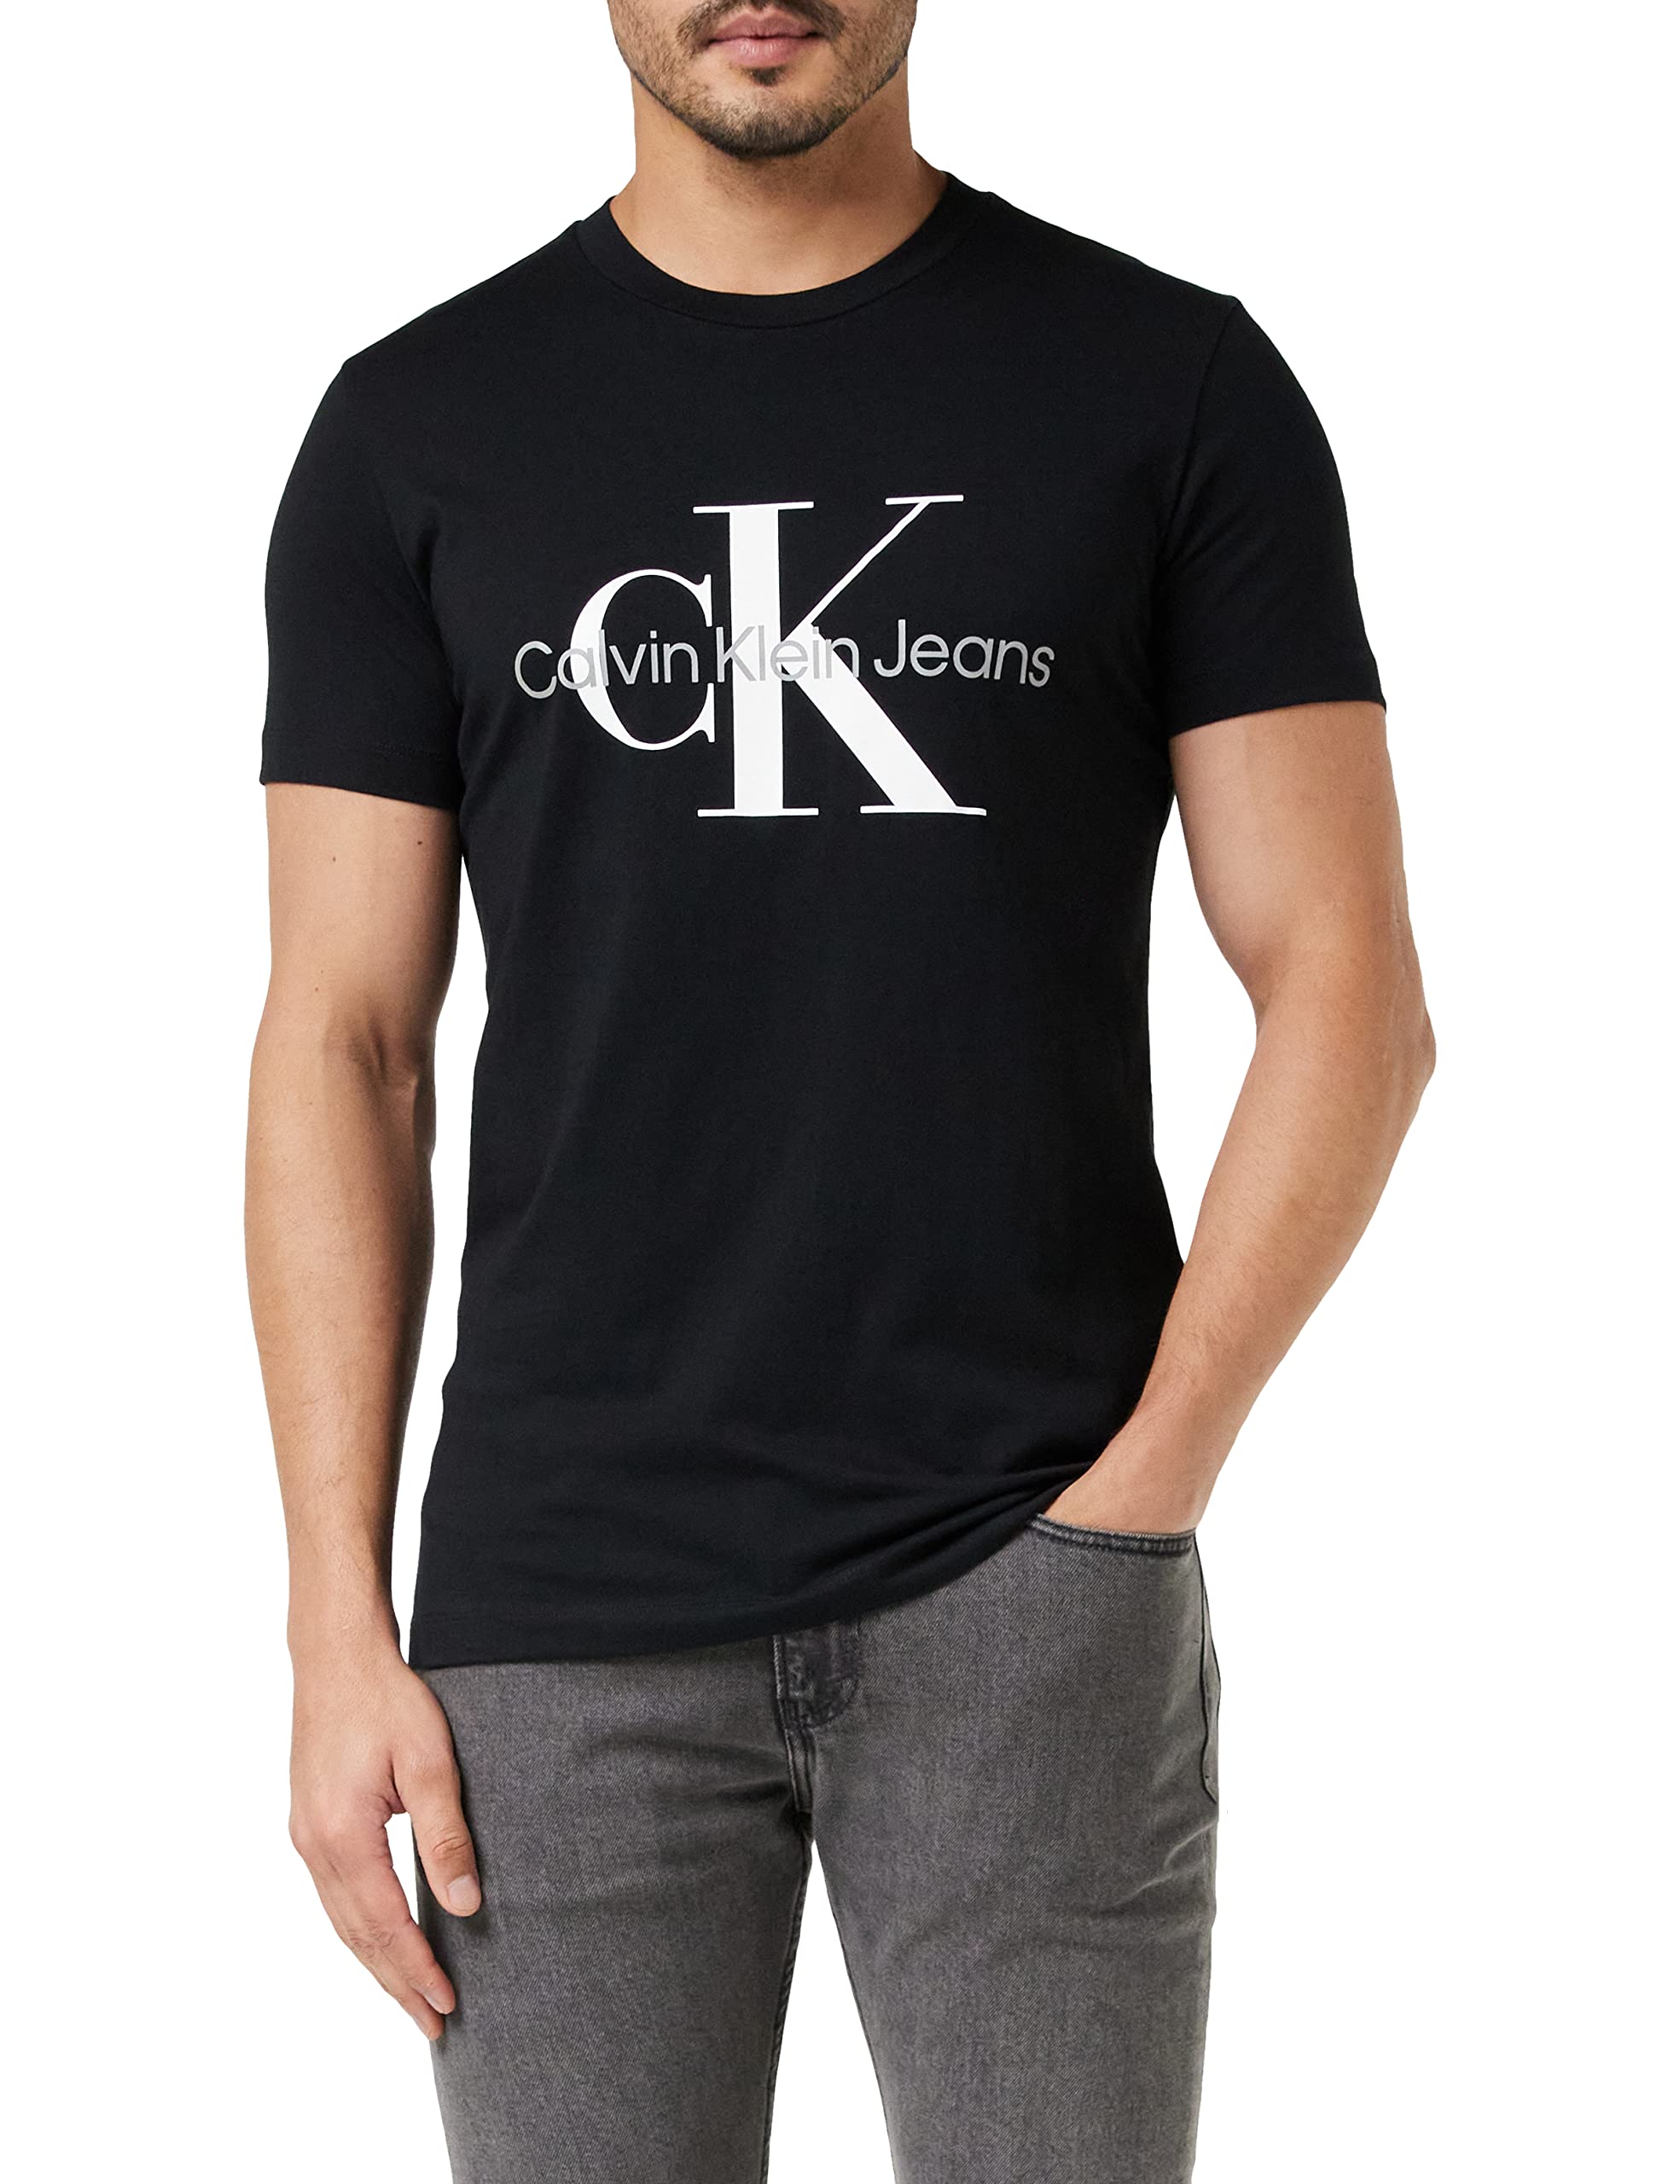 Calvin Klein Jeans Herren T-Shirt Kurzarm Core Monologo Slim Fit , Schwarz (Ck Black), L